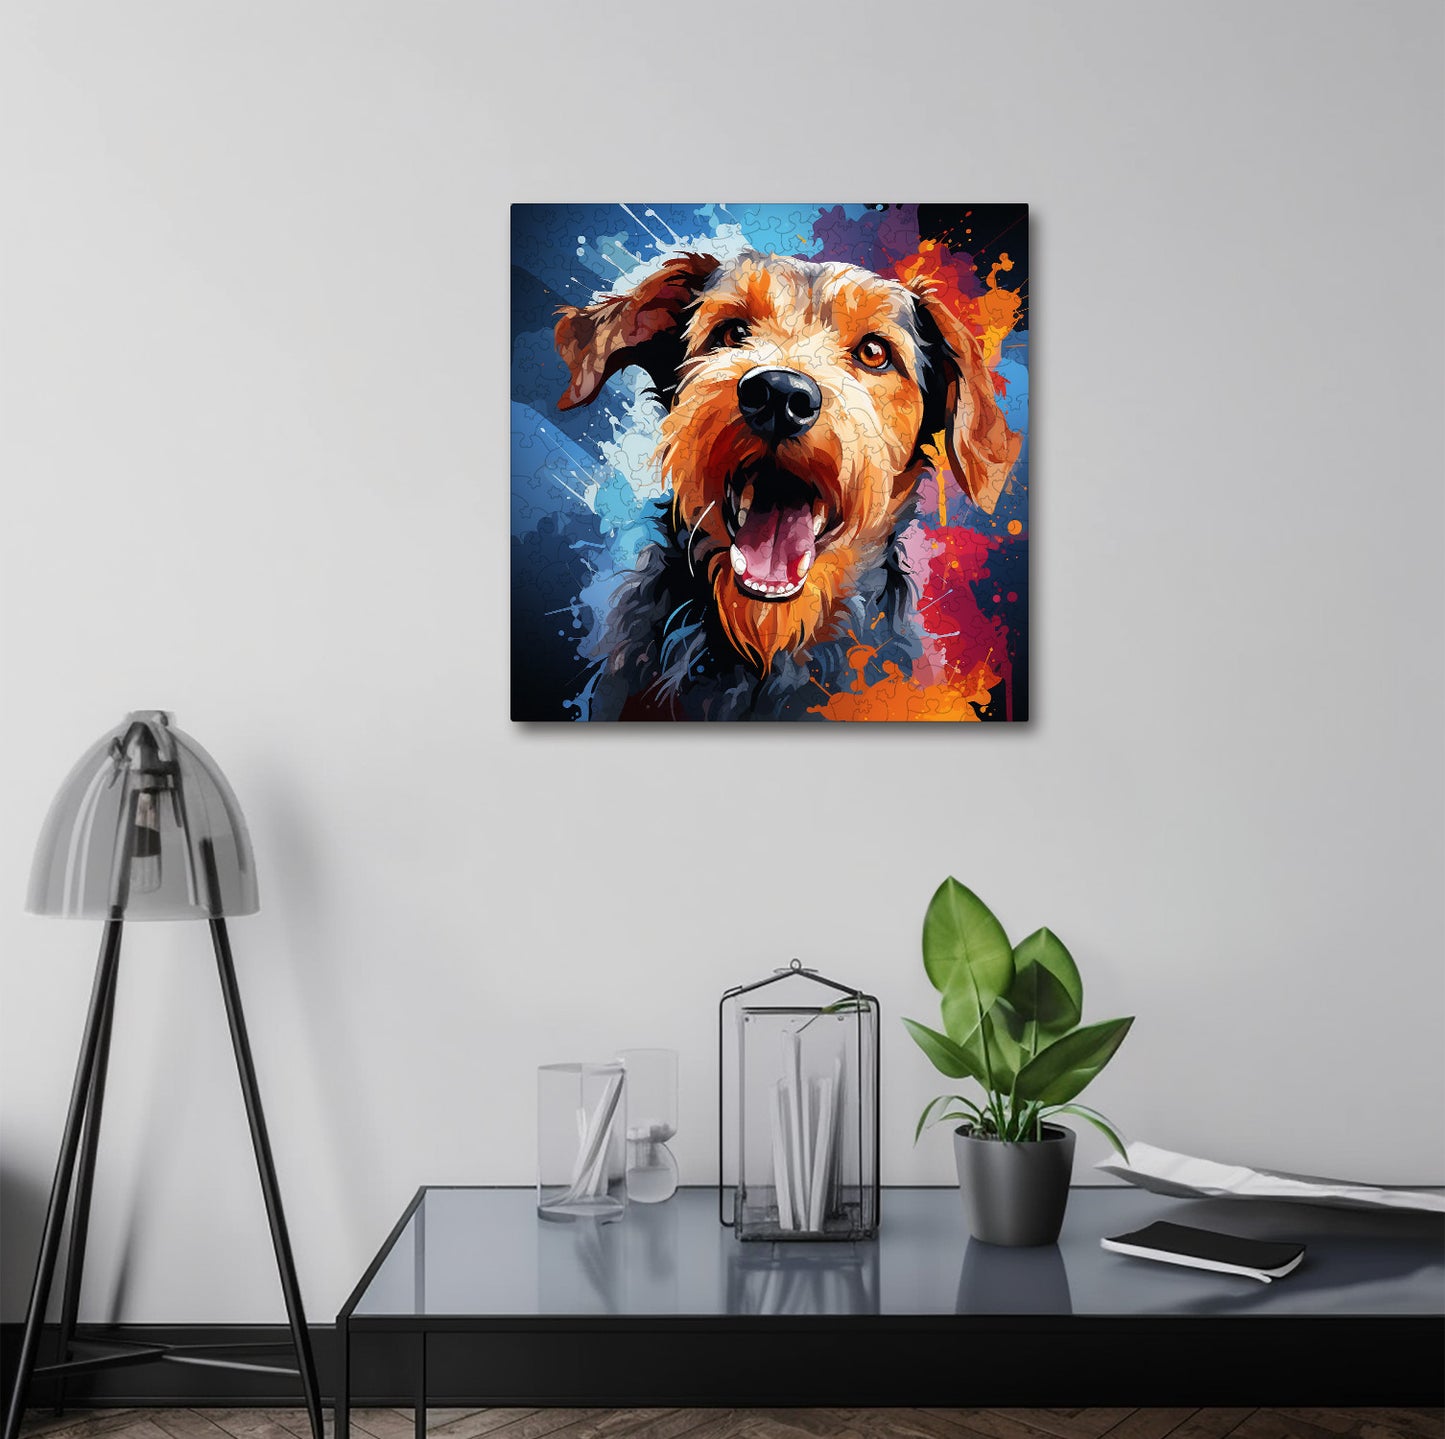 Puzzle cu Animale - Caini - Welsh Terrier 1 - 200 piese - 30 x 30 cm